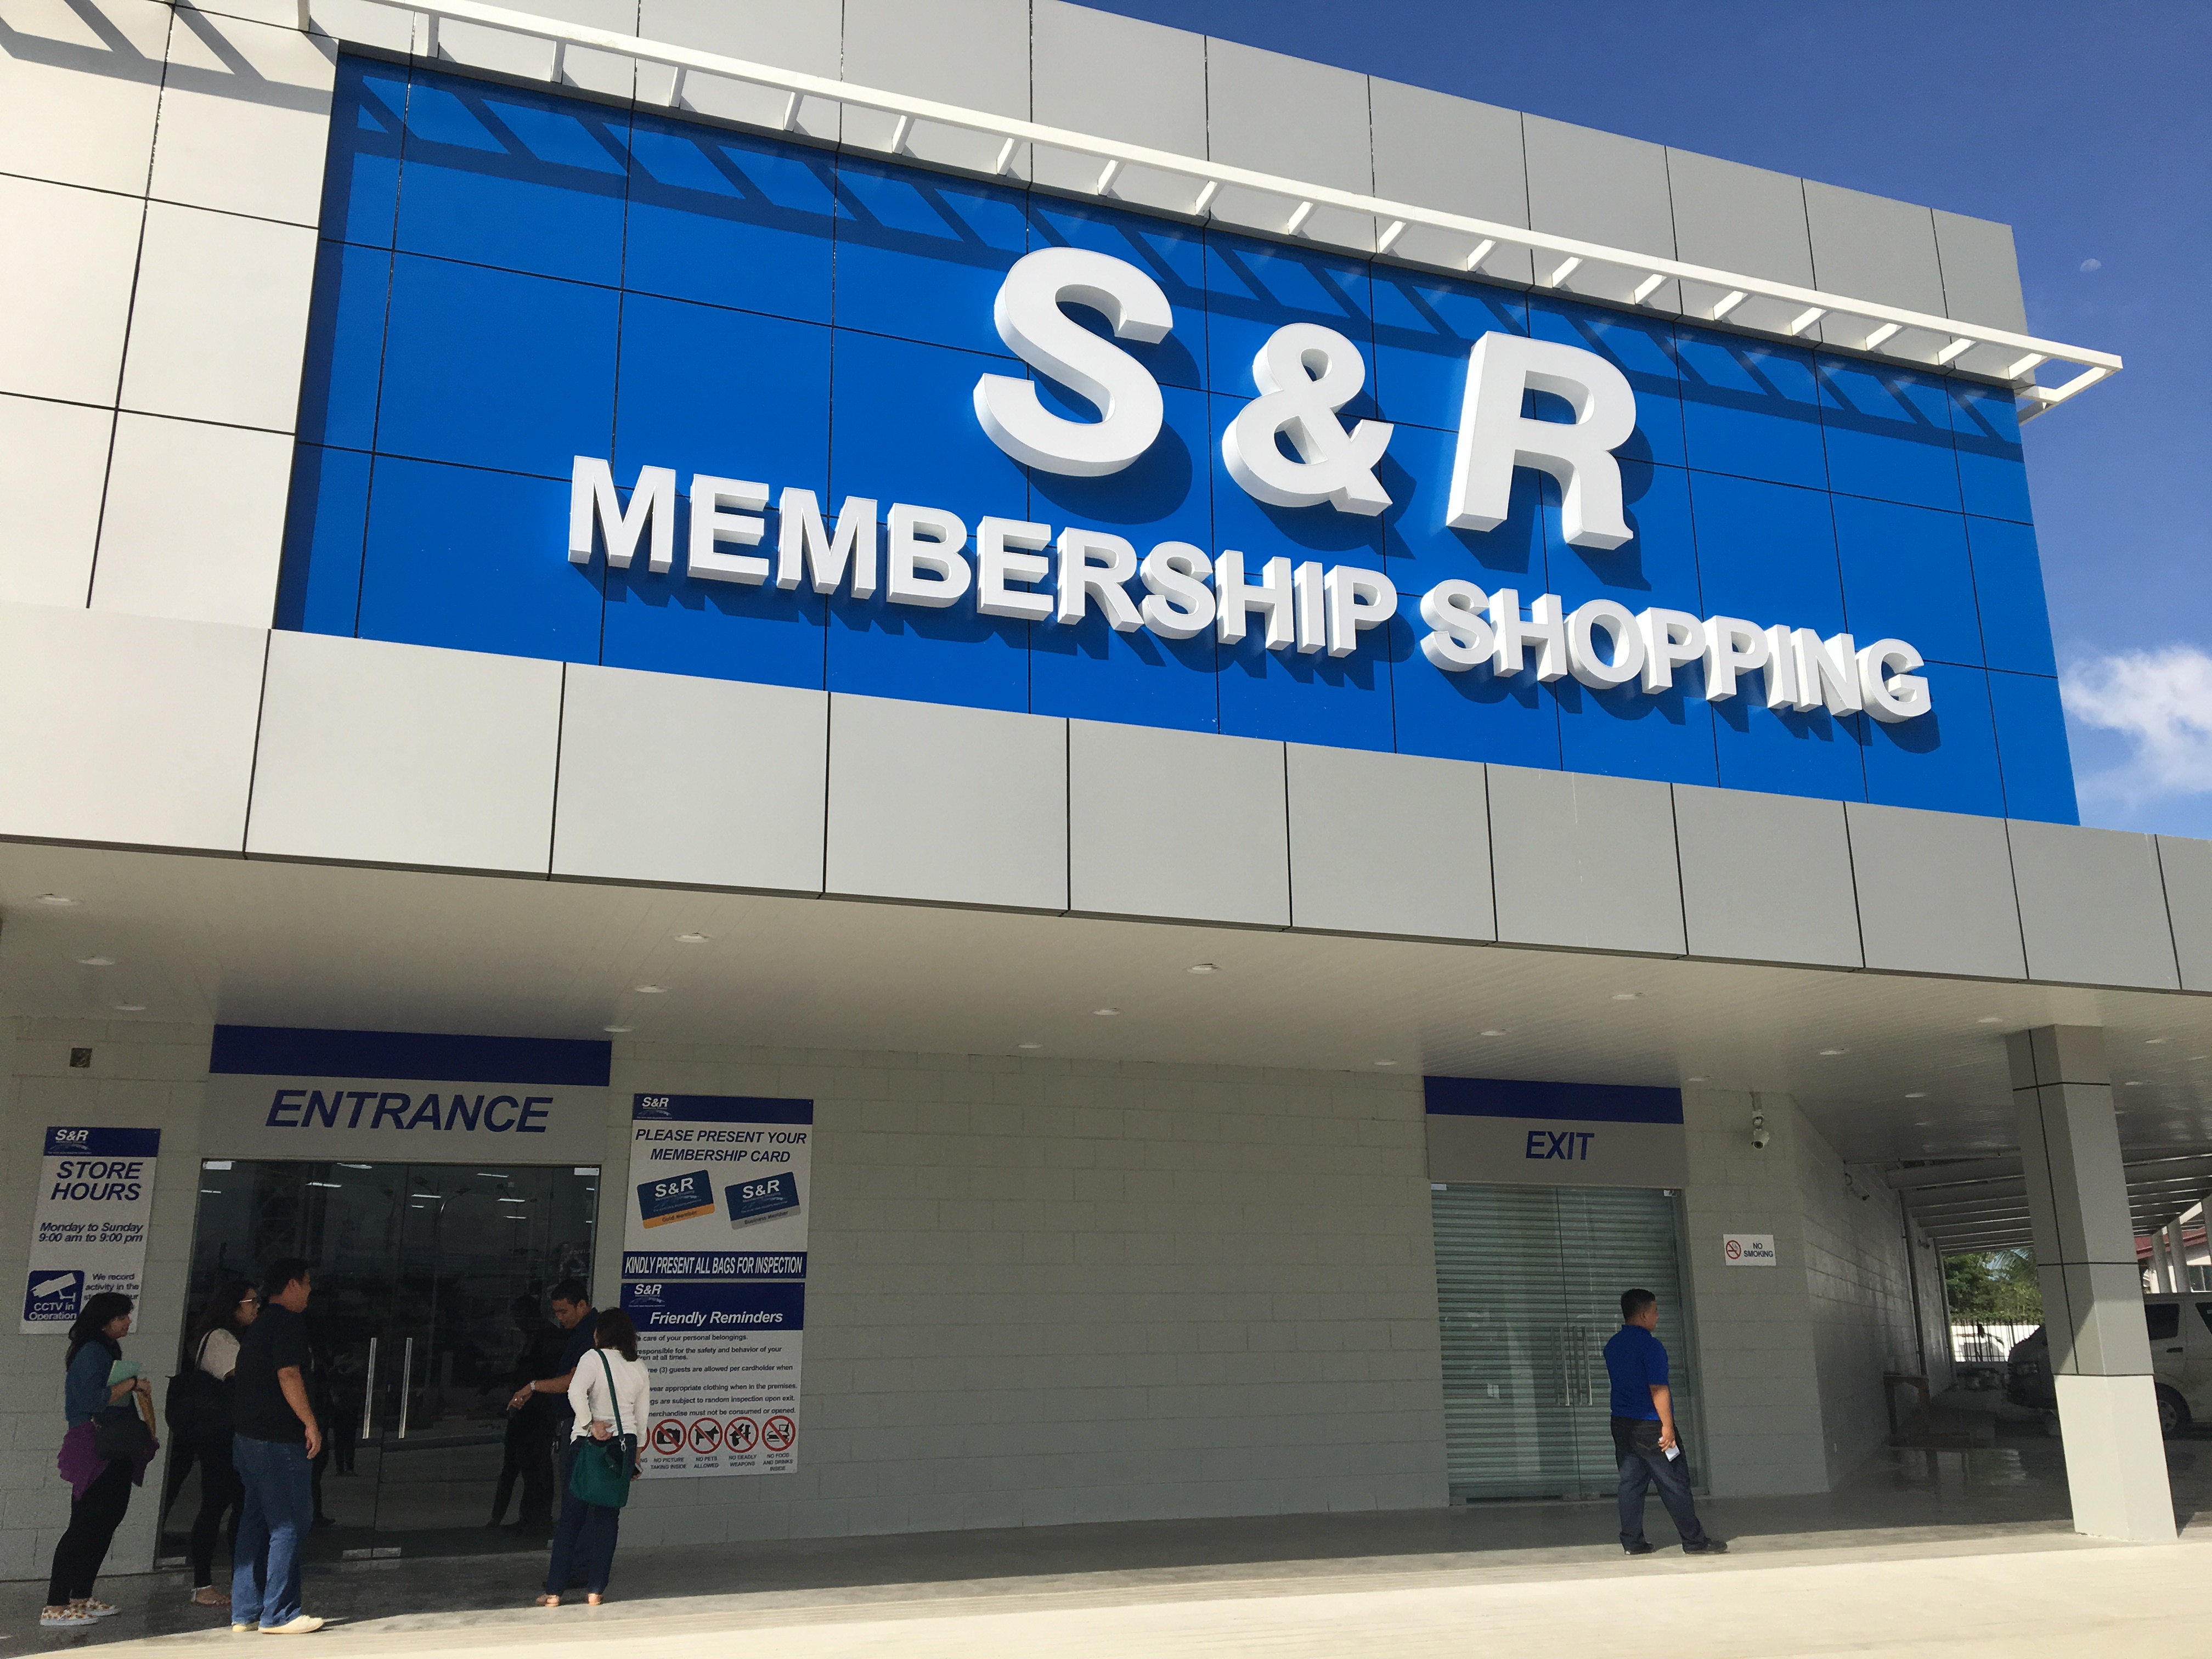 PHOTOS: Sneak peek inside S&R Membership Shopping Cagayan de Oro